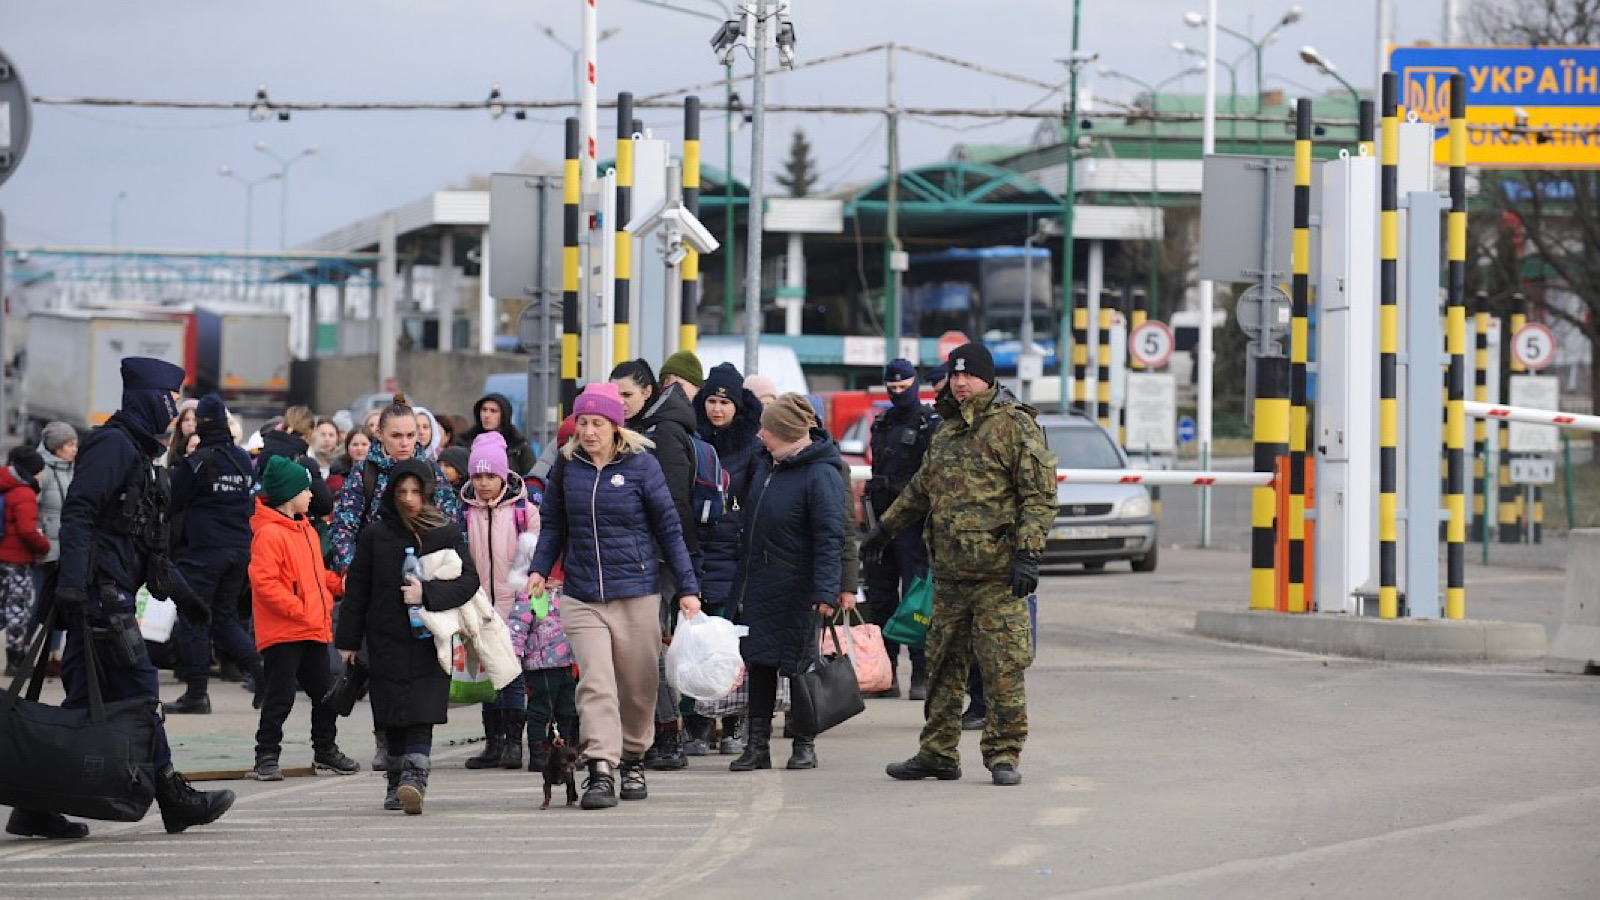 ukraine flygtning traumer krig